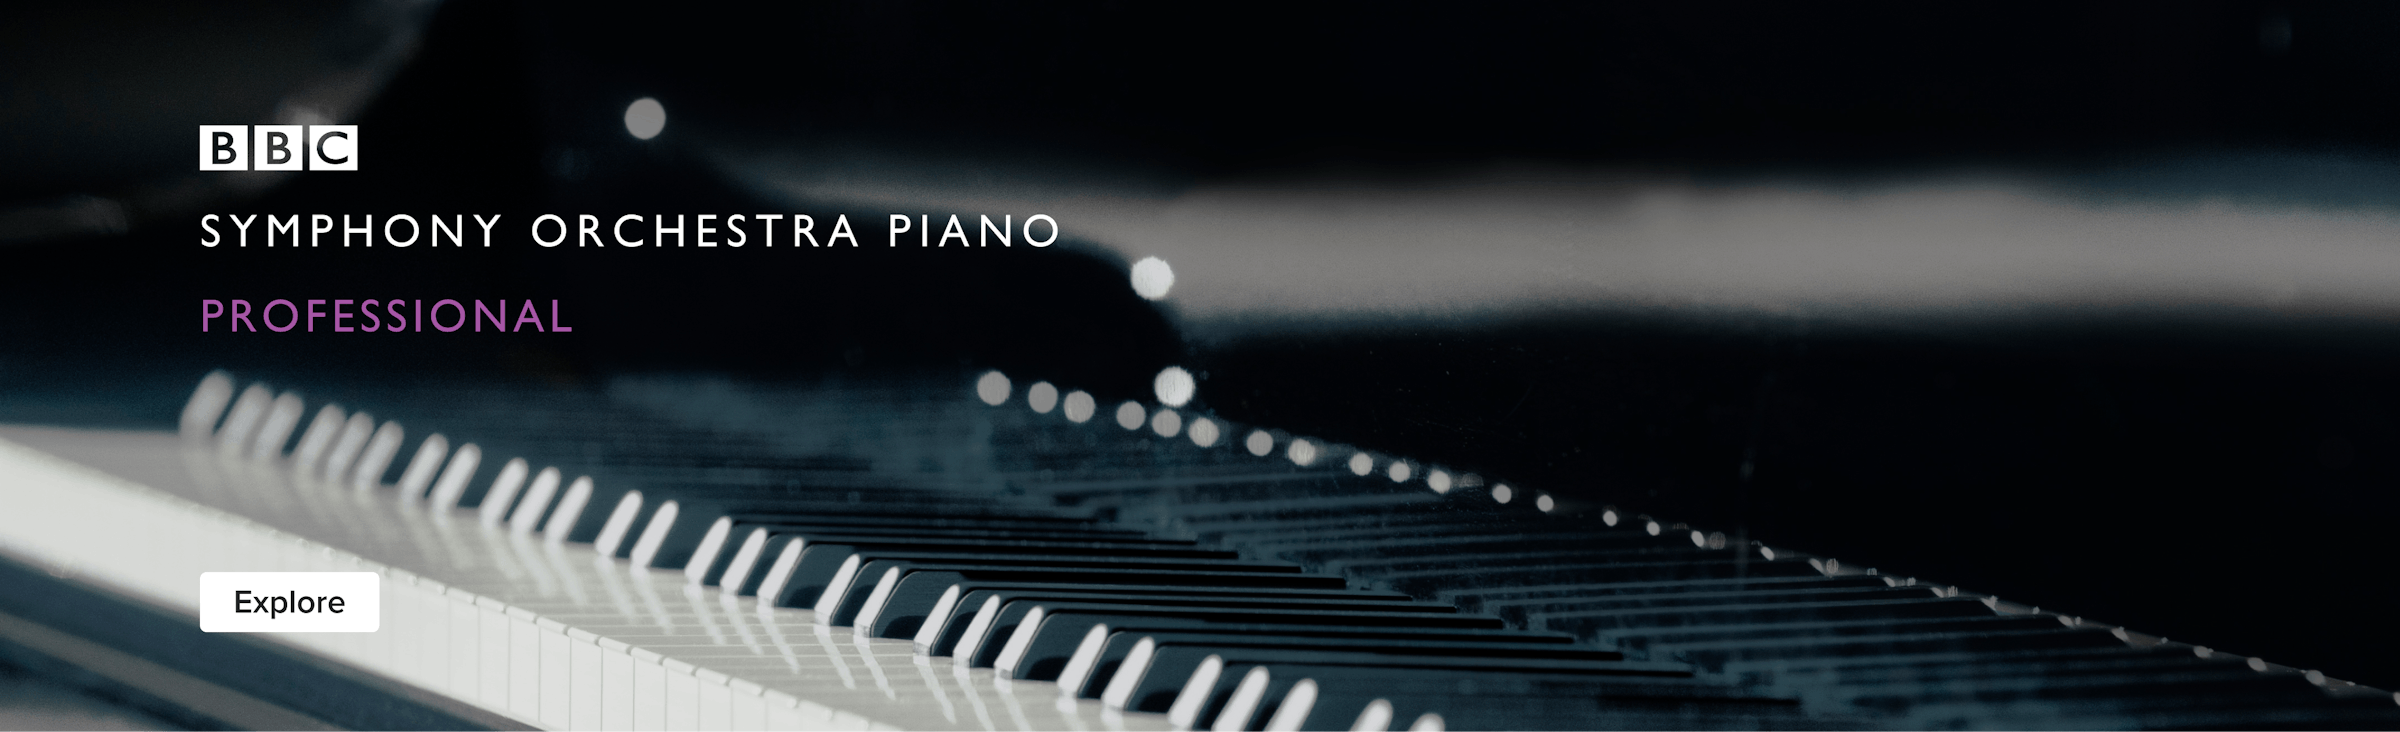 Explore BBC Symphony Orchestra Piano Professional